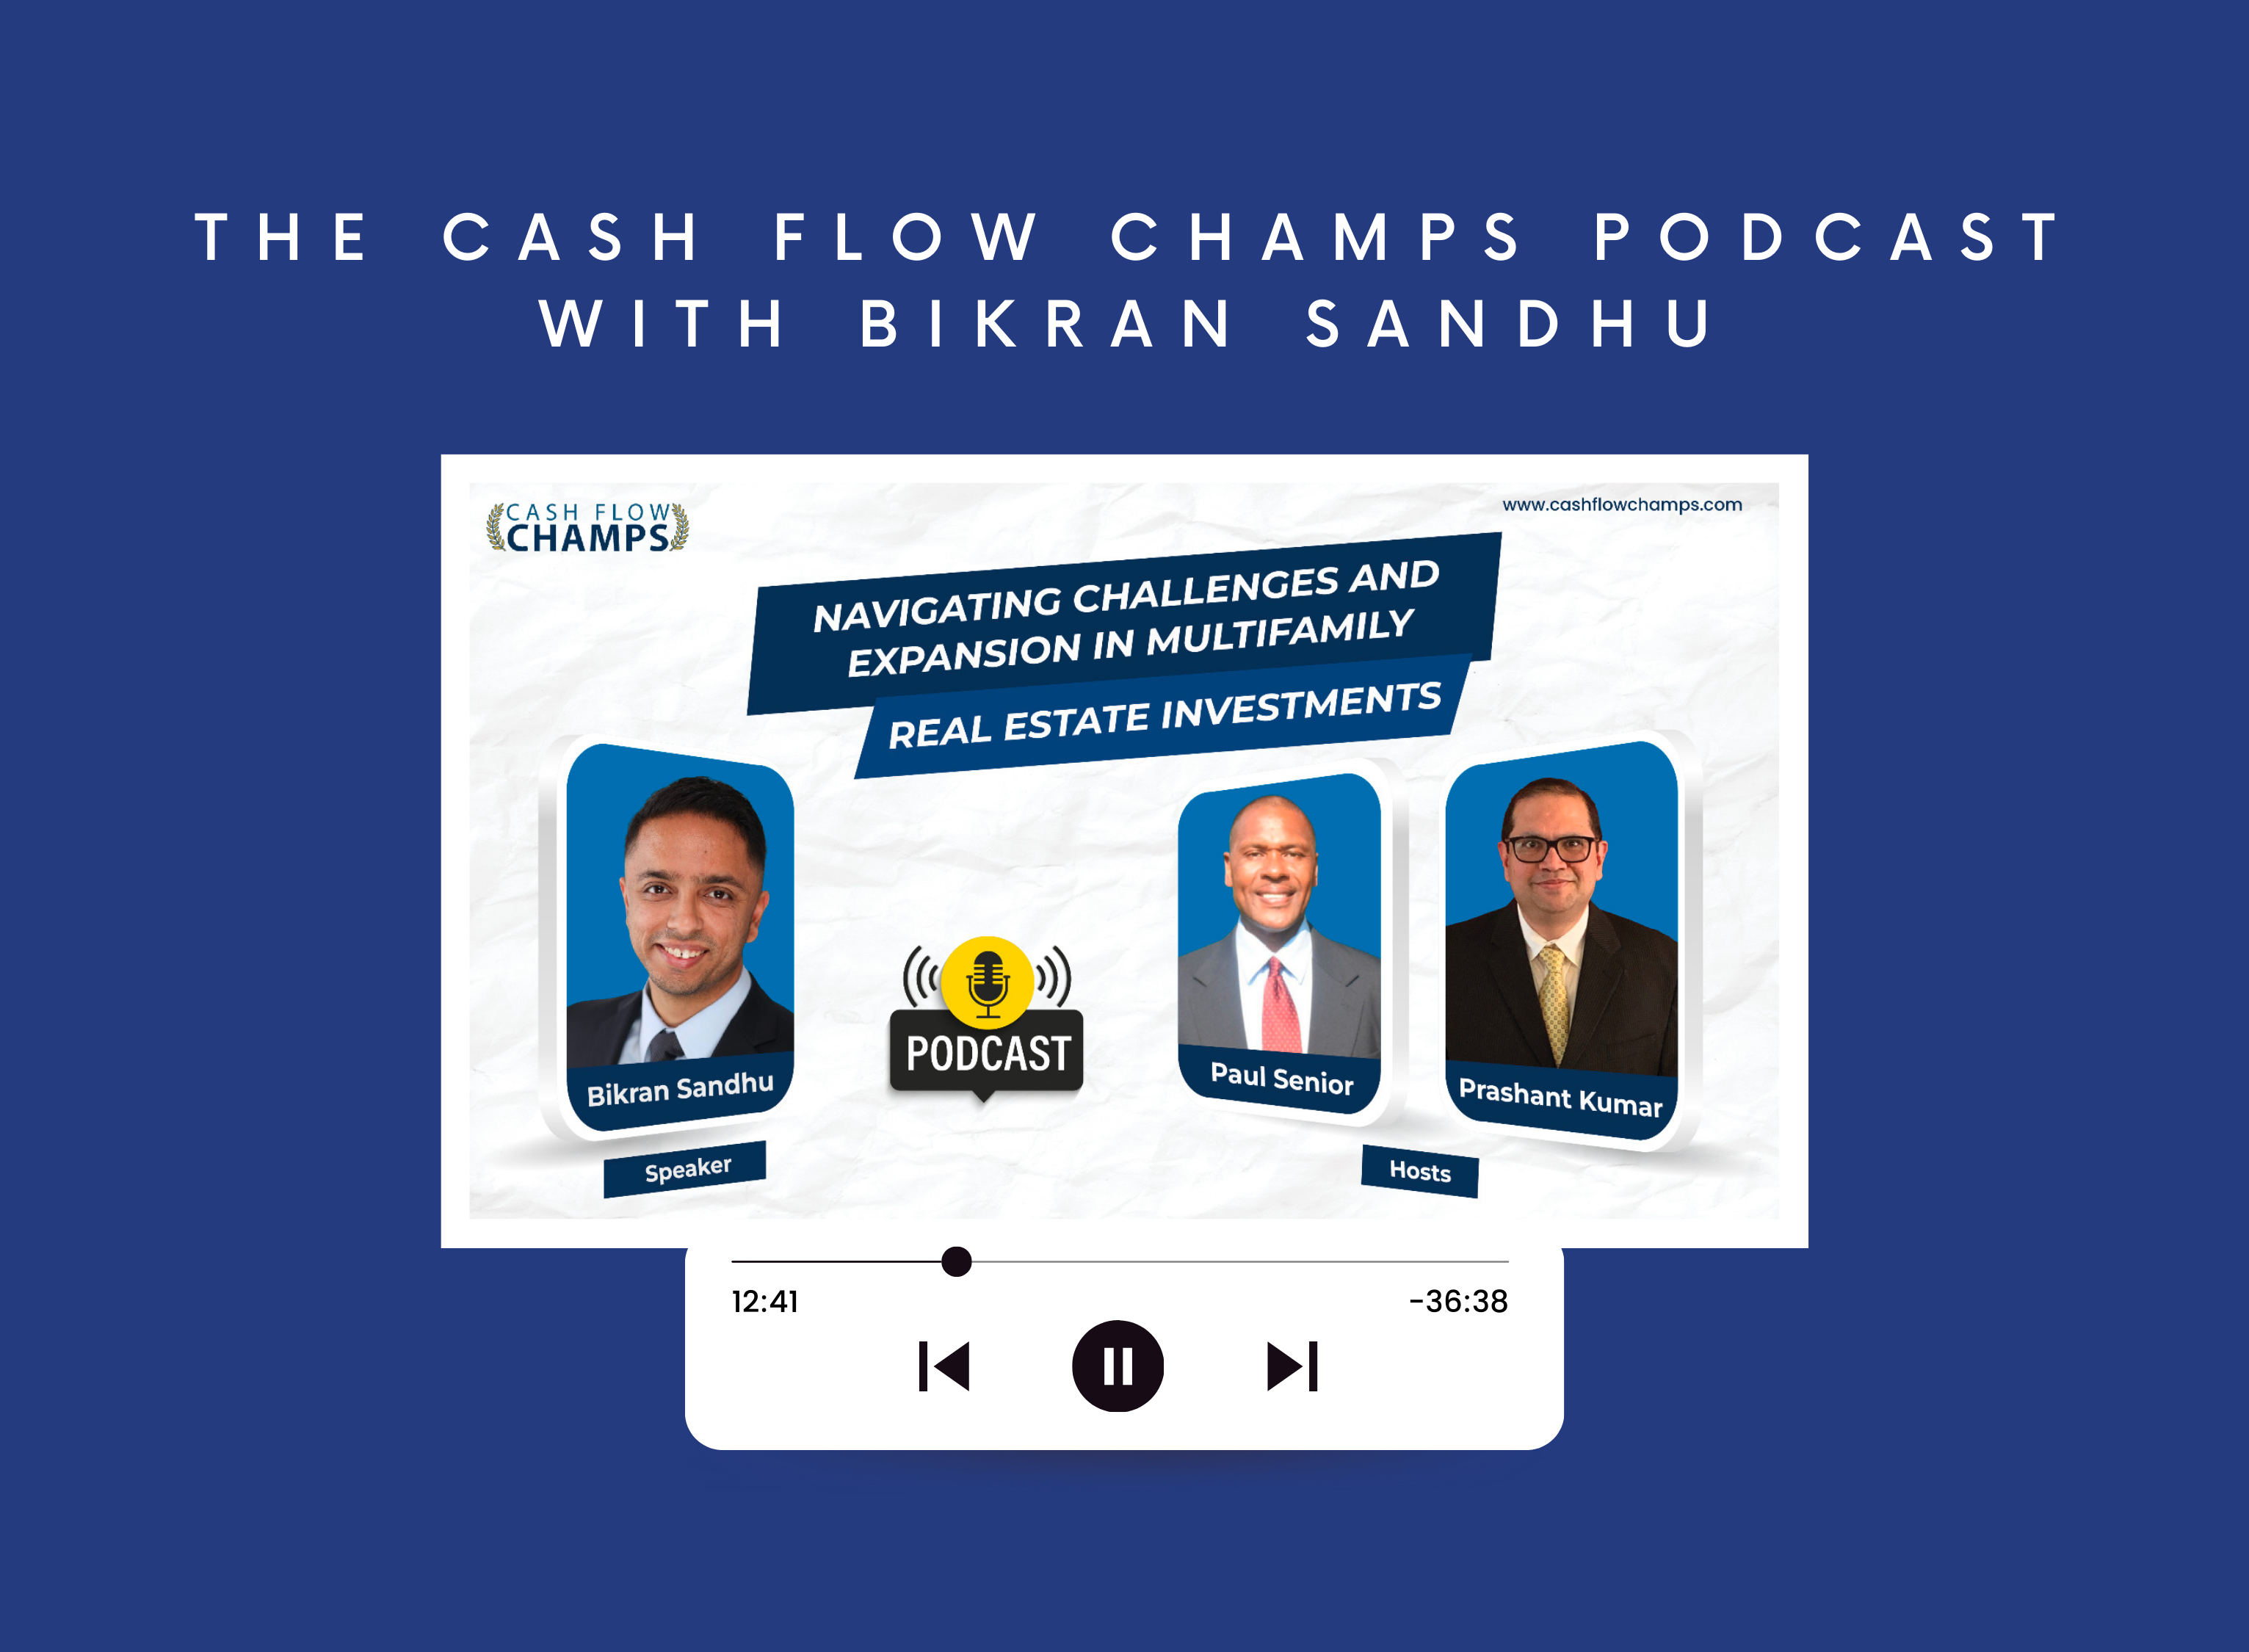 The Cash Flow Champs Podcast with Bikran Sandhu